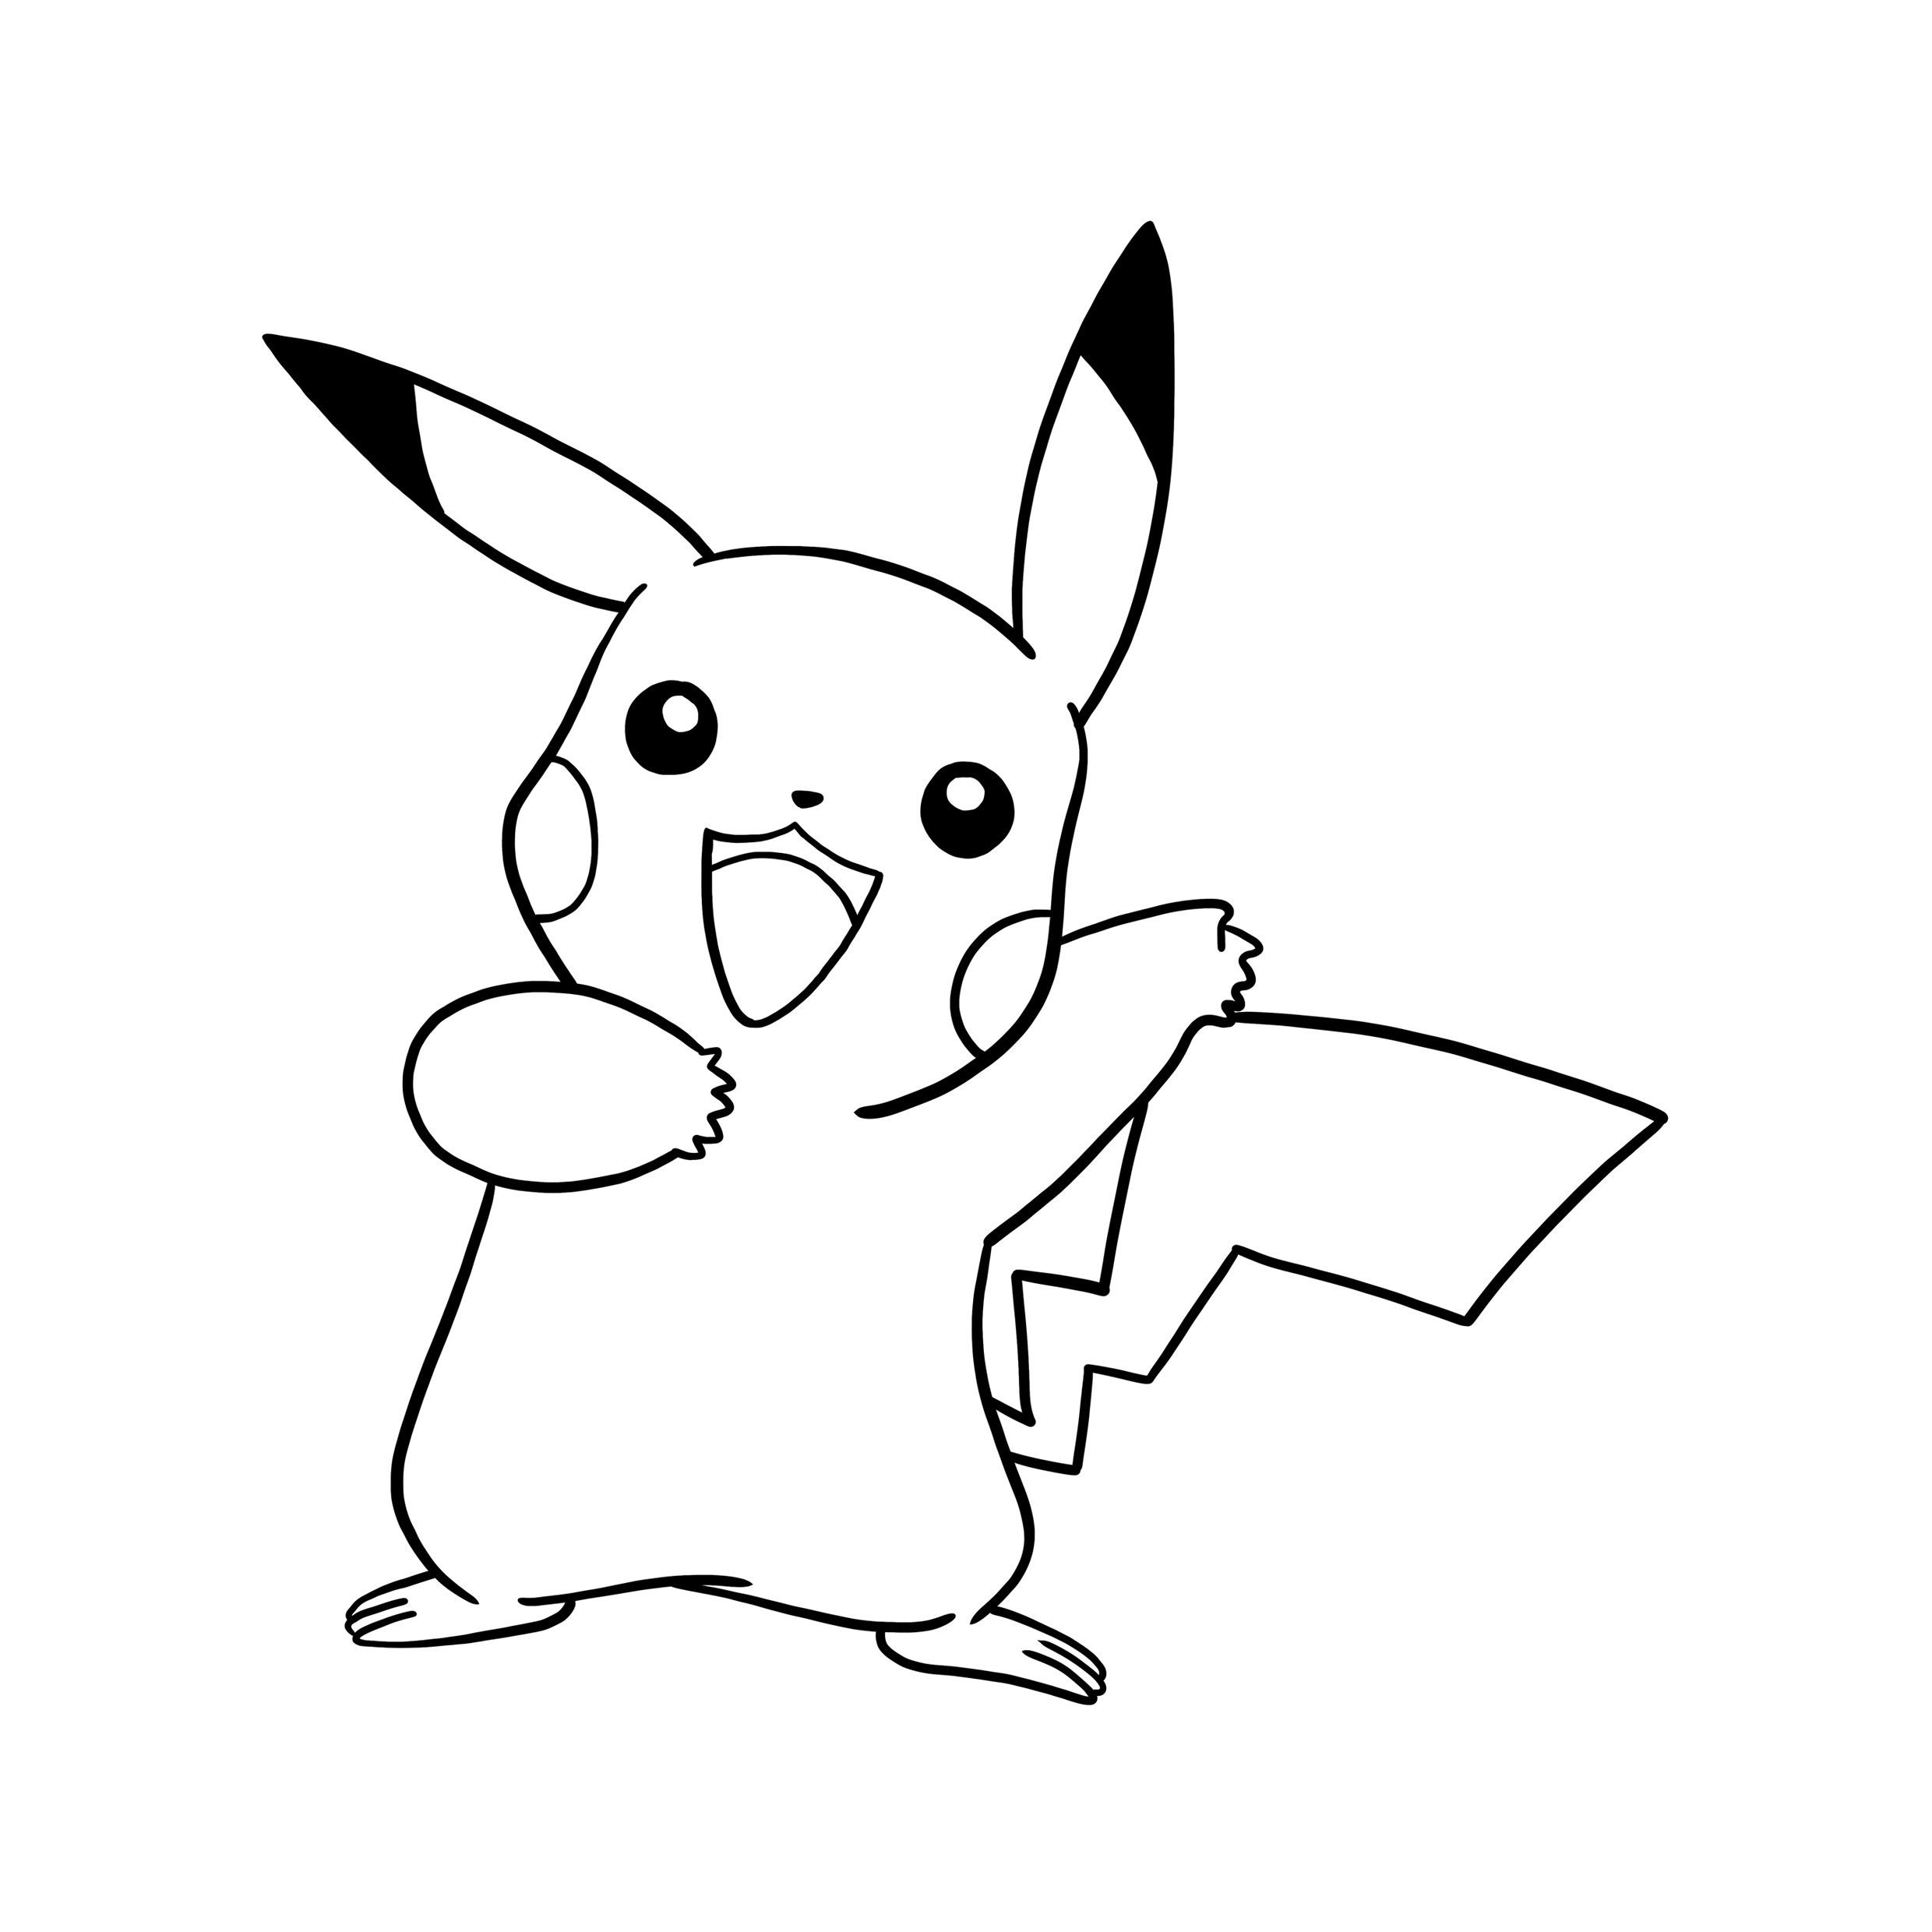 Pikachu drawings new.